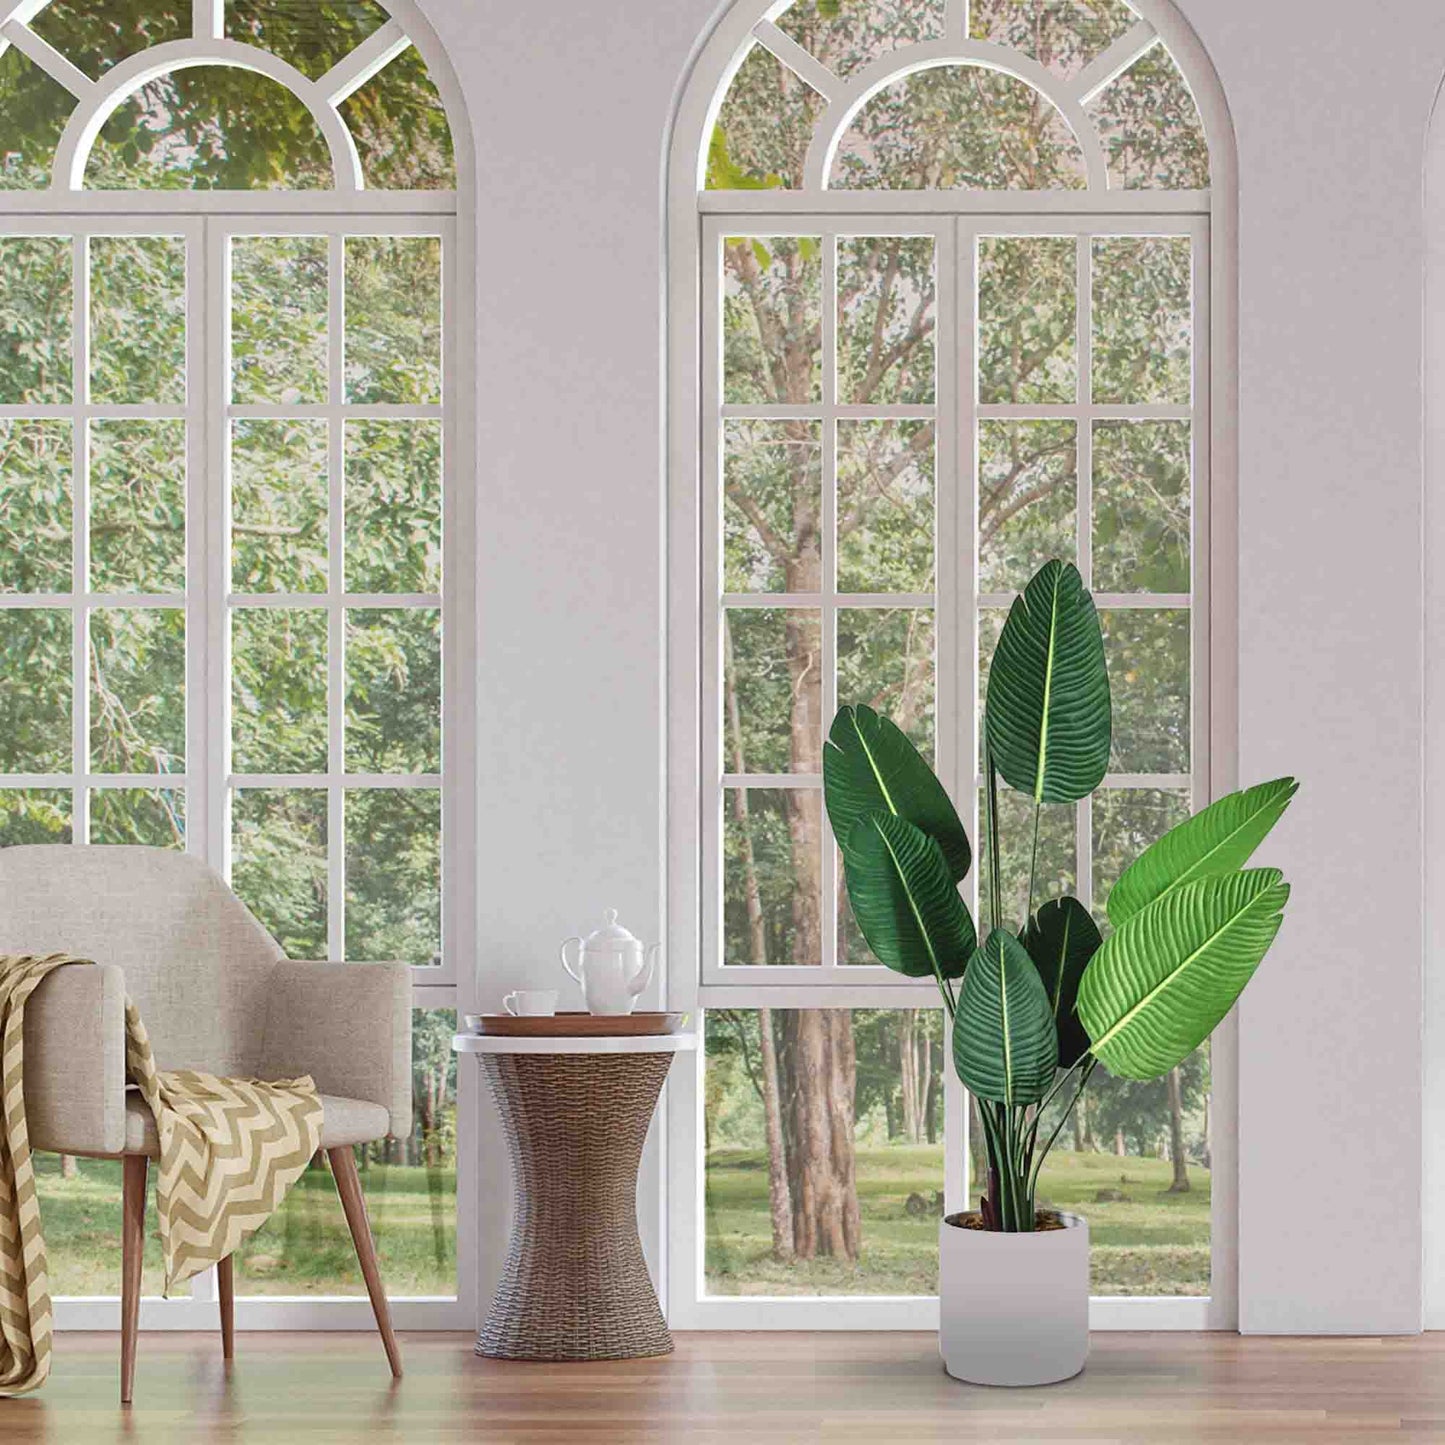 Artificial Banana Palm Tree in White Ceramic Pot with Pedestal - 60" - Botanica Home ™